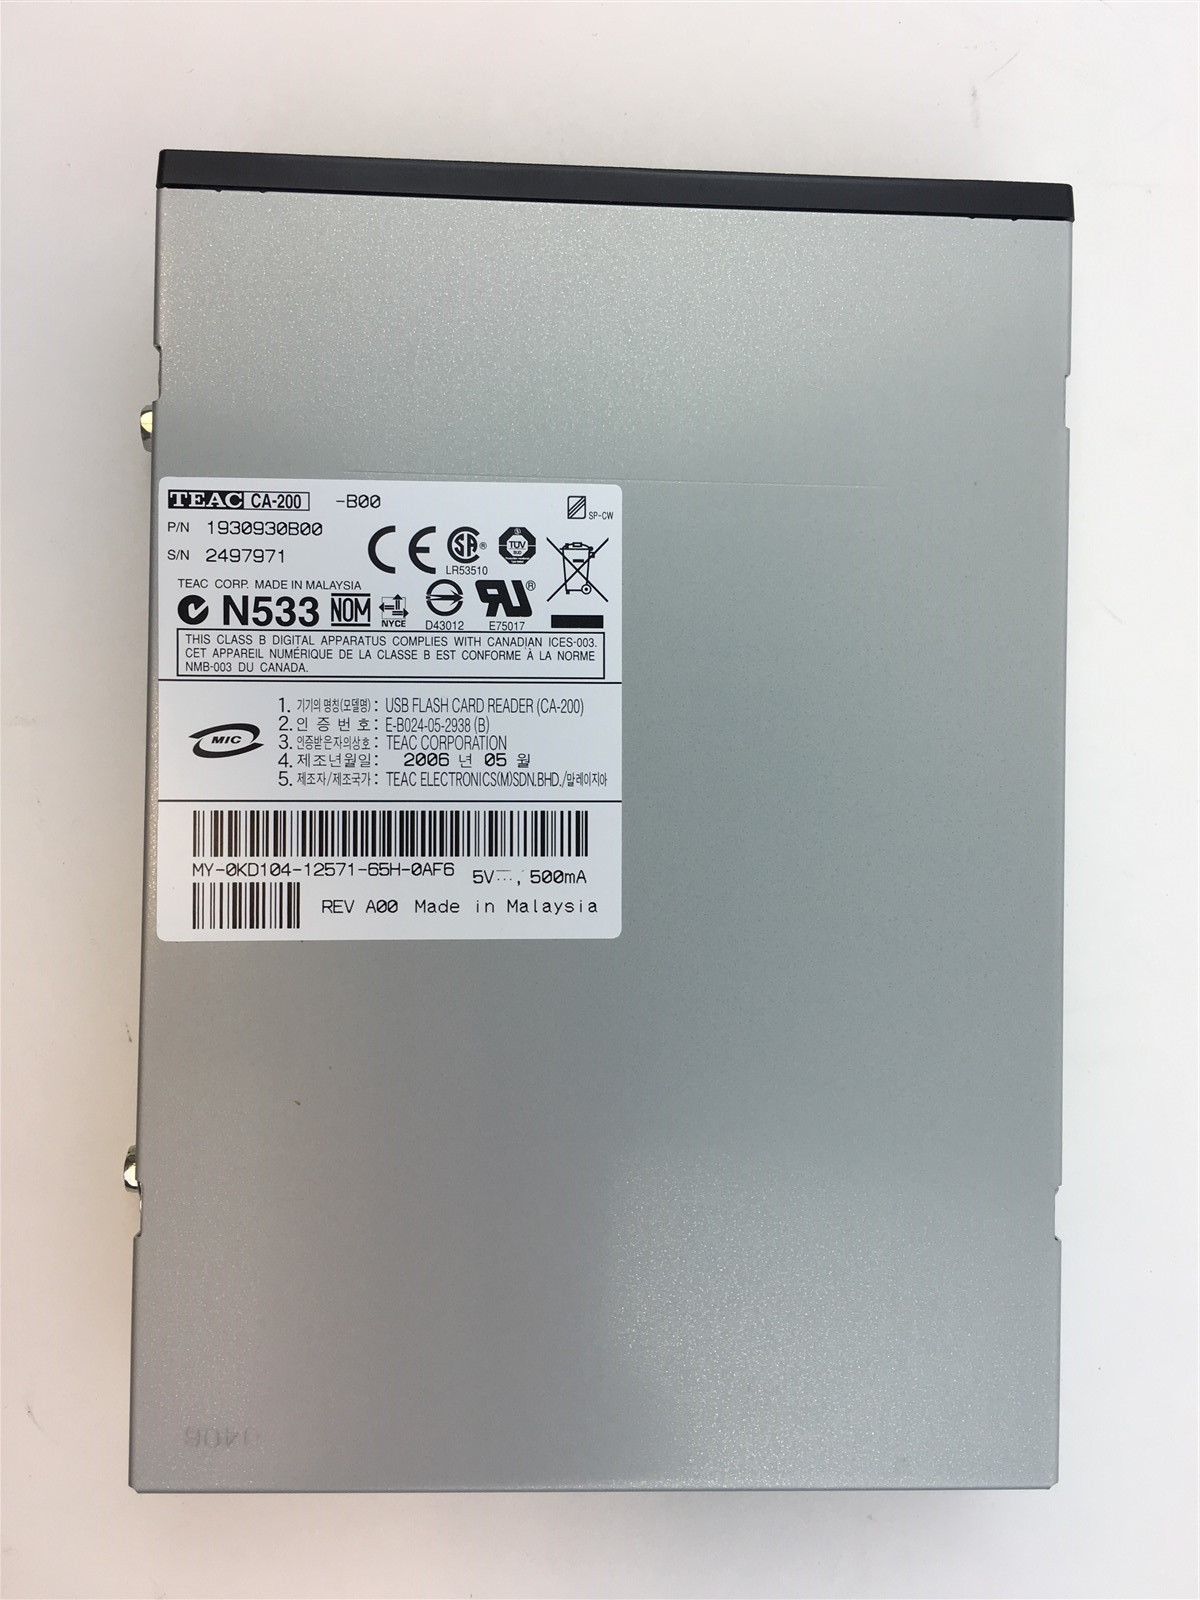 Dell XPS Dimension 13-in-1 Internal Media Card Reader 480 Mb/s KD104 0KD104